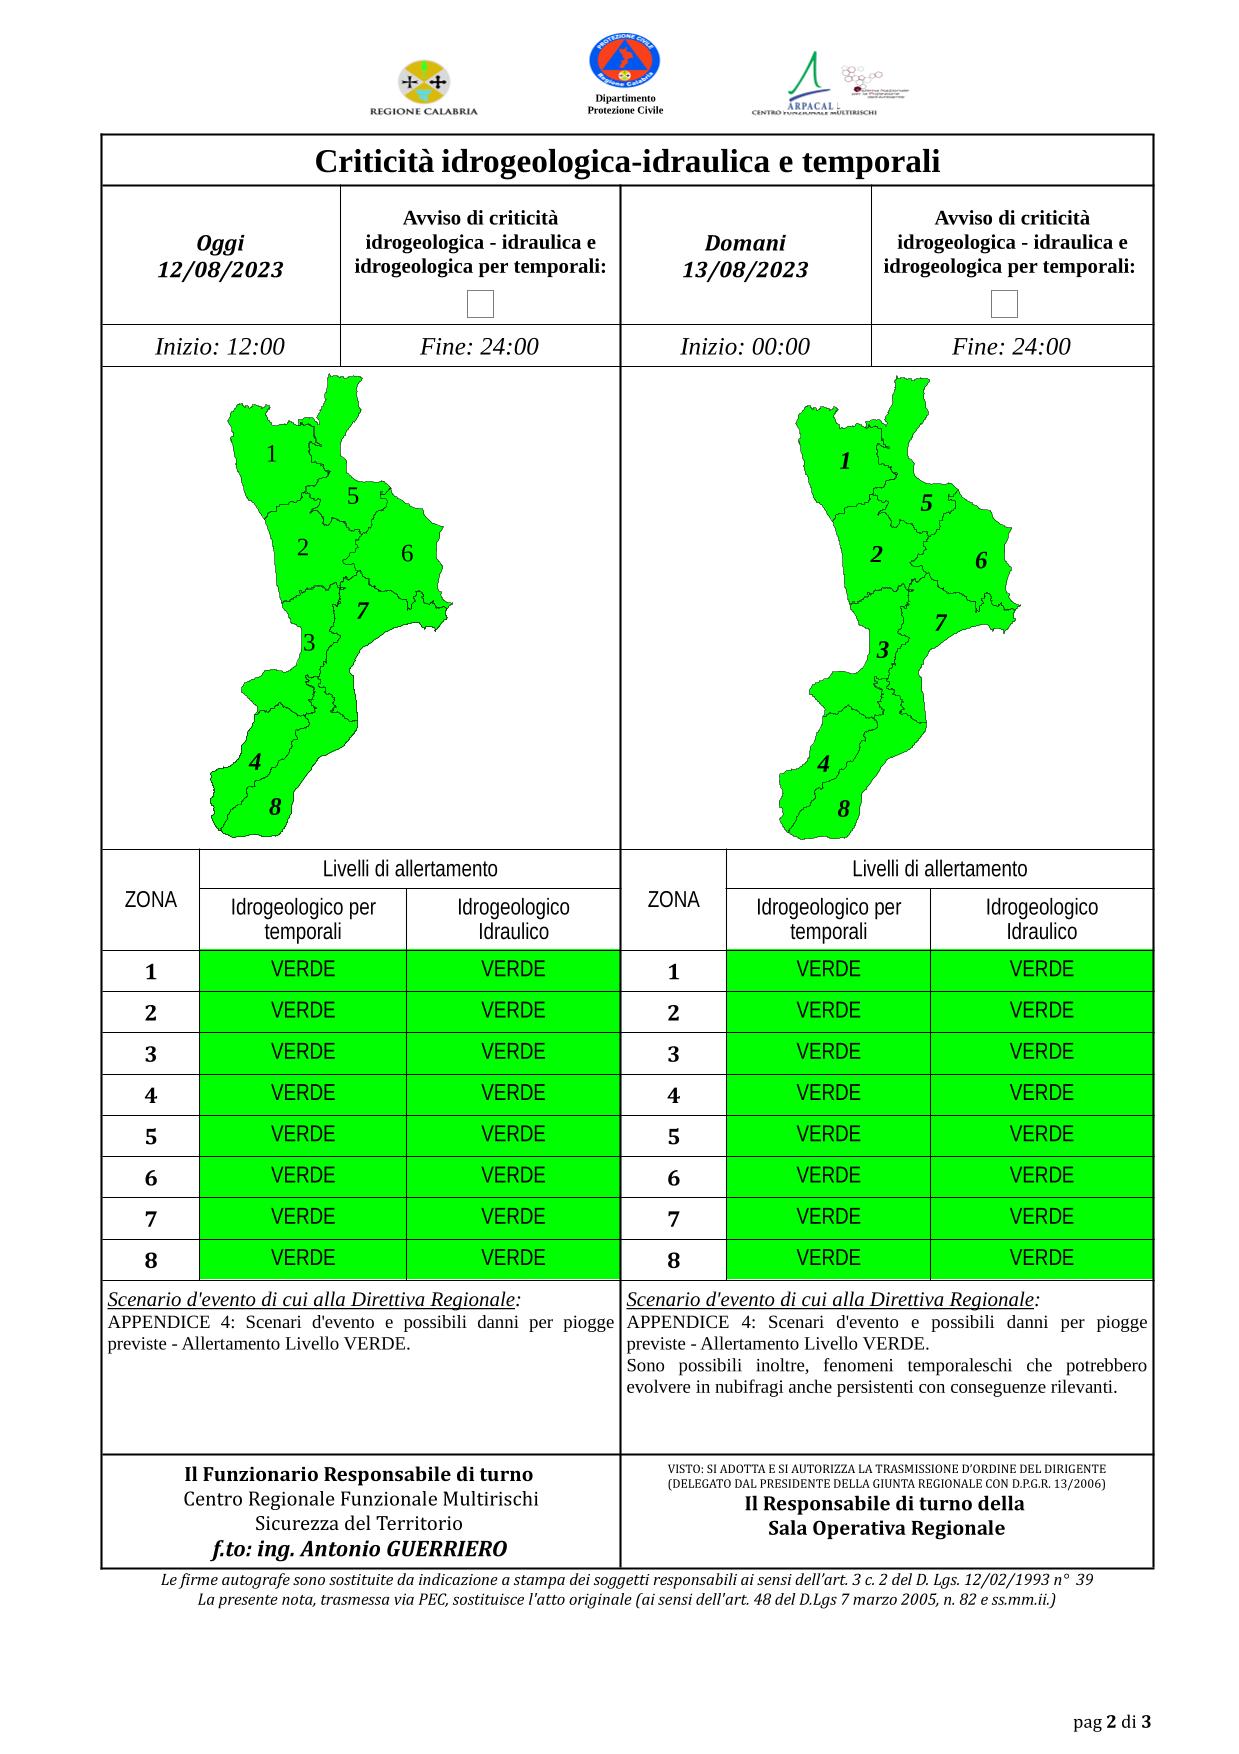 Criticità idrogeologica-idraulica e temporali in Calabria 12-08-2023